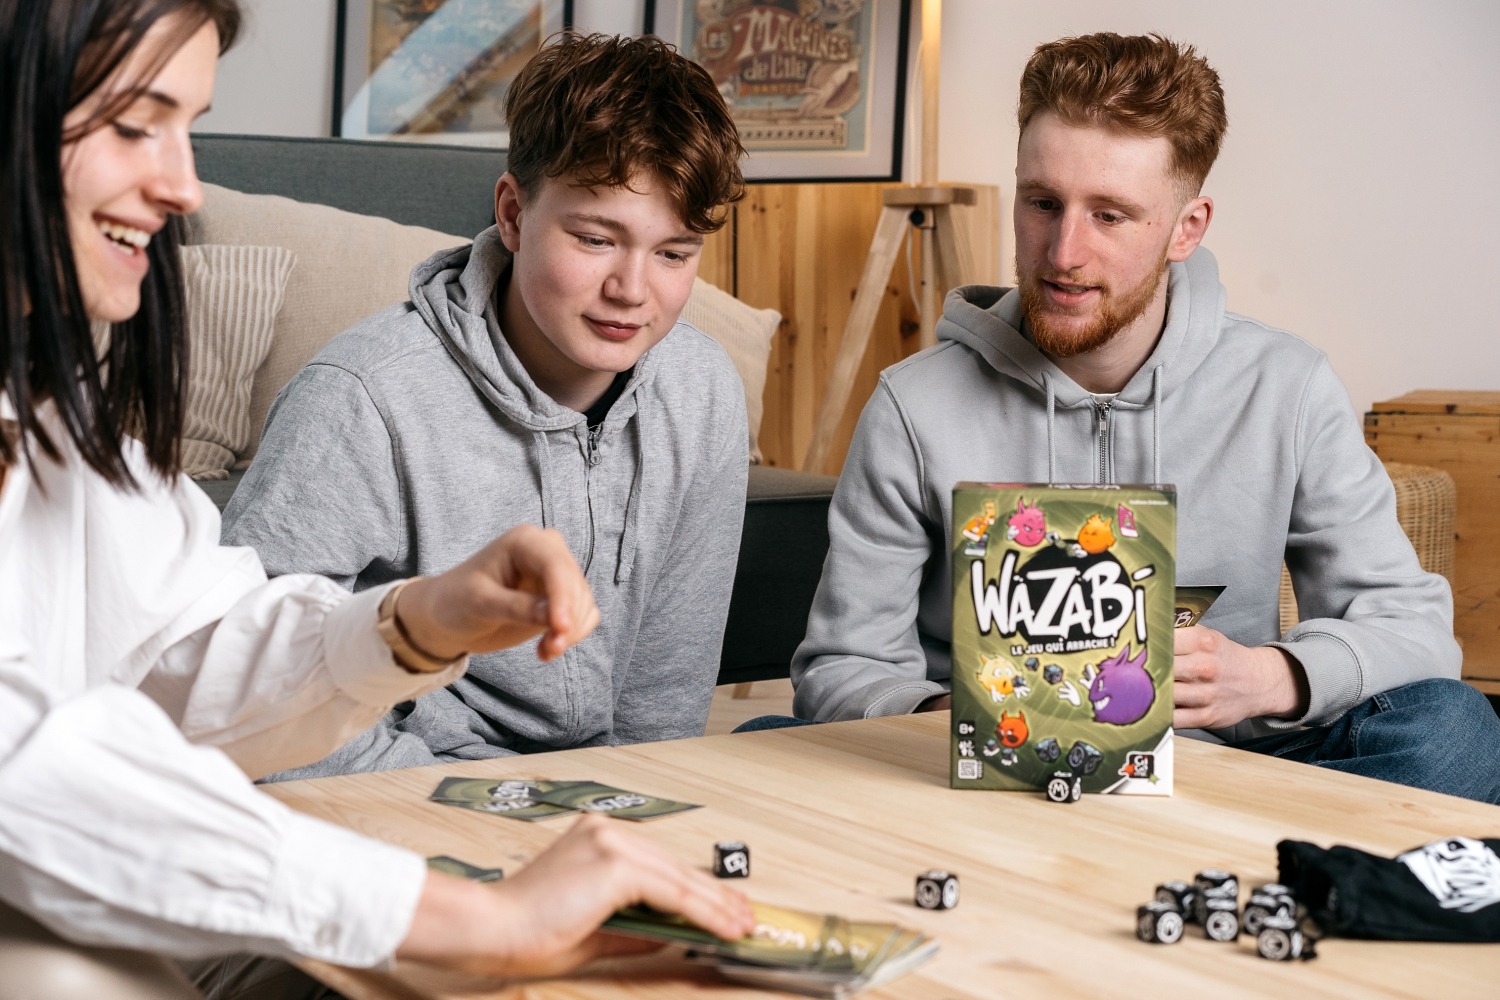 Wazabi gigamic jeu de société boardgame 